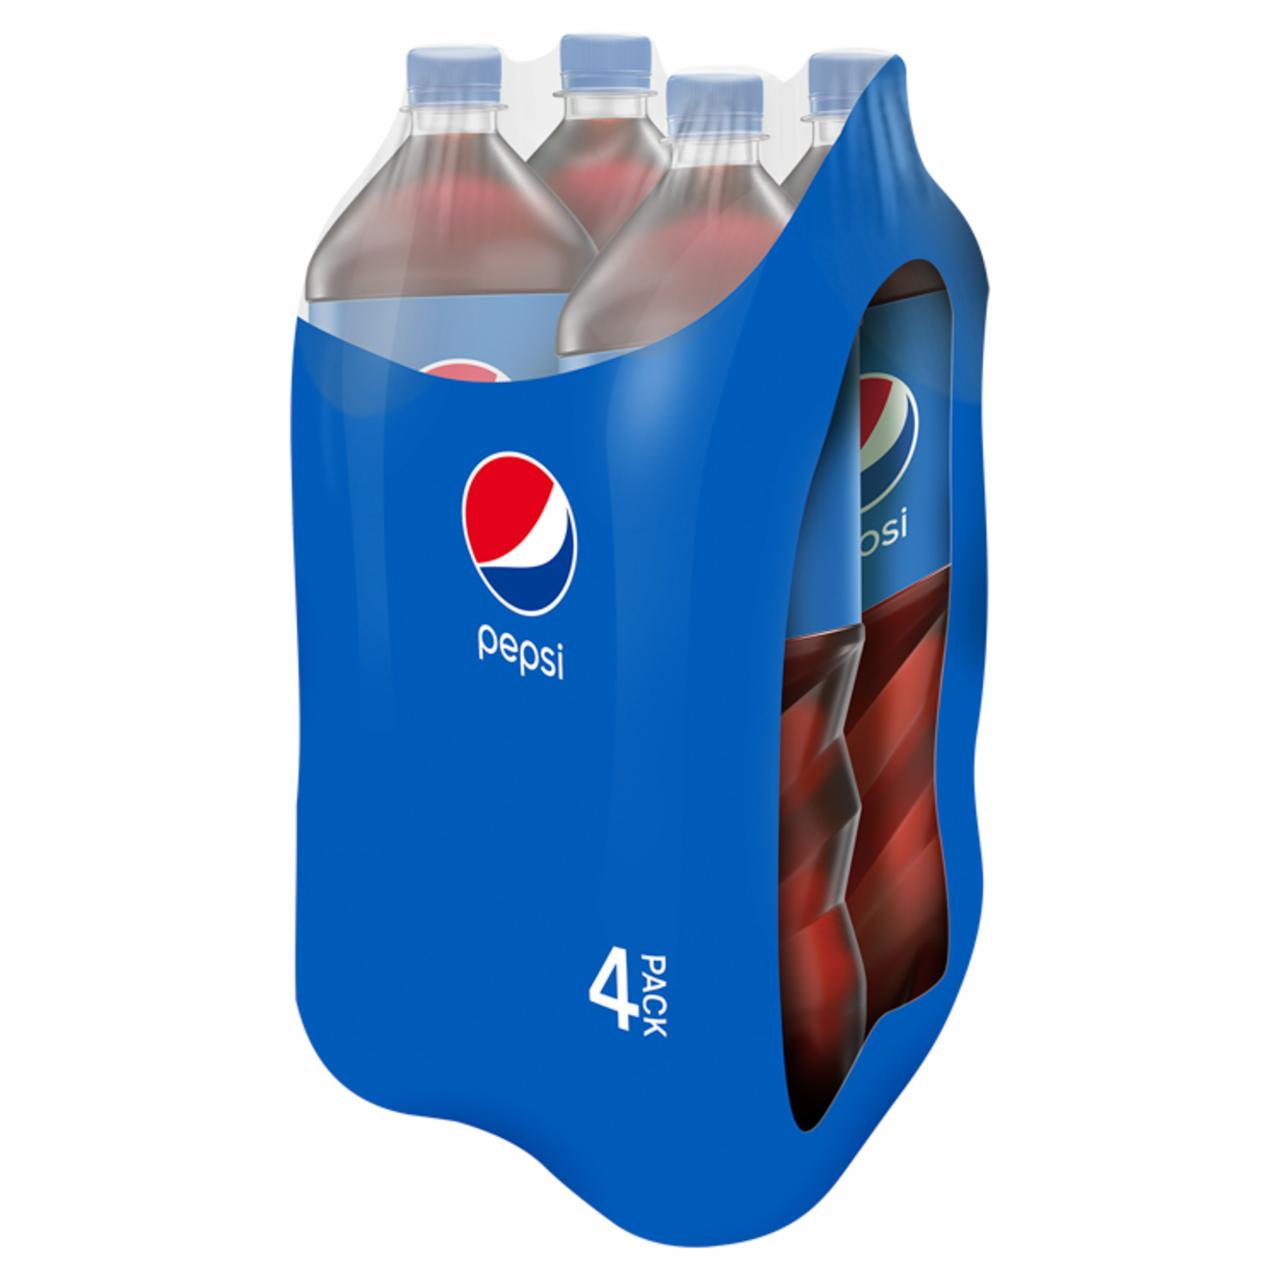 Zdjęcia - Pepsi Napój gazowany 6 l (4 x 1,5 l)